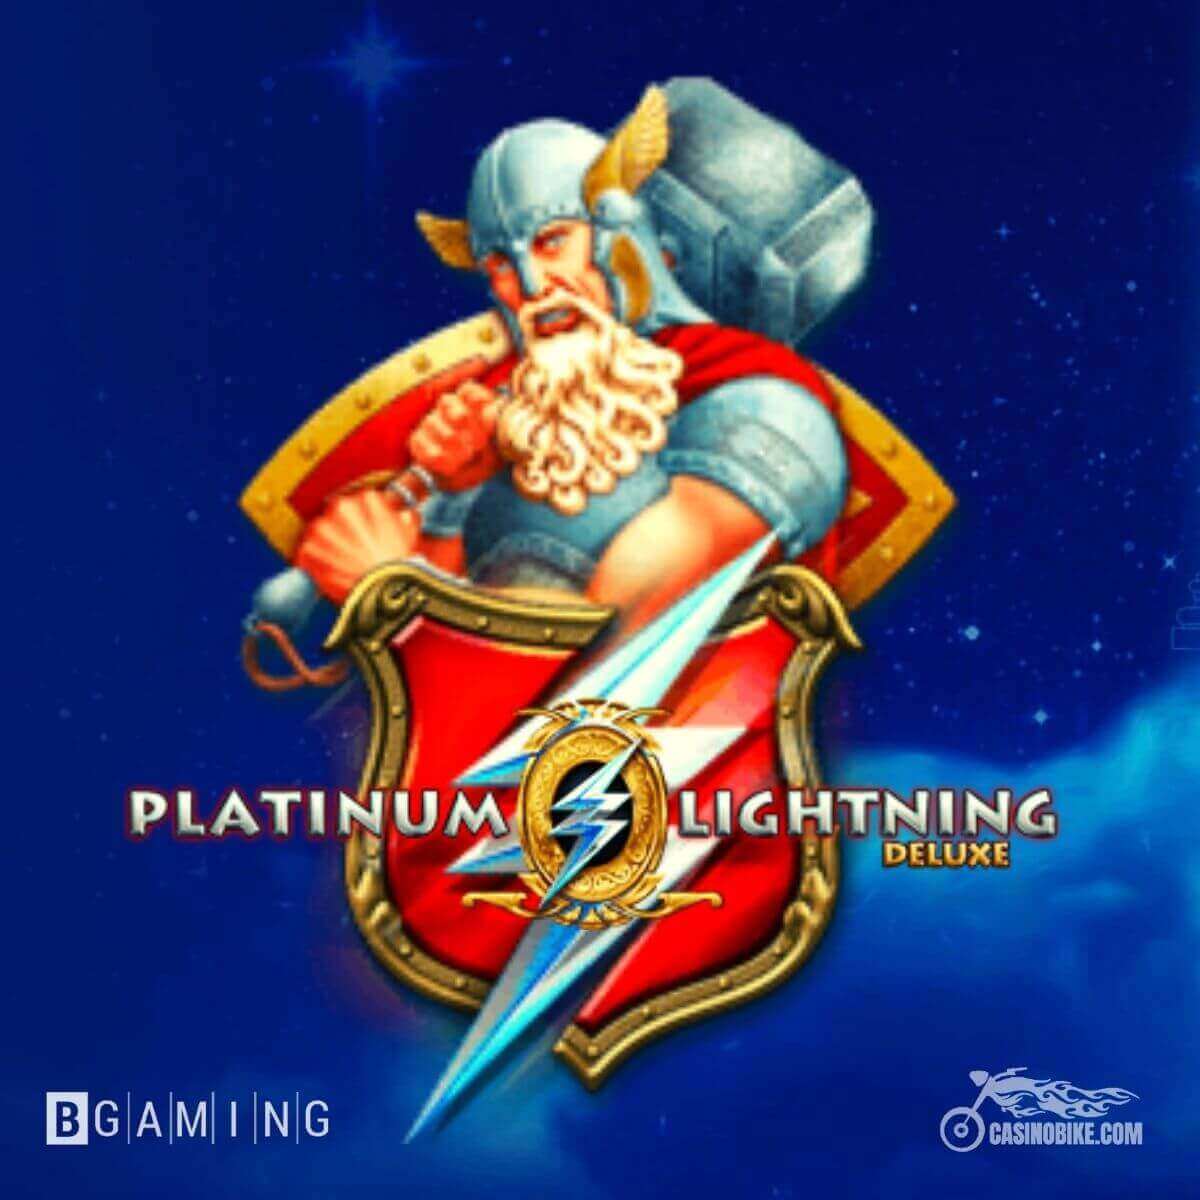 Platinum Lightning Deluxe Slot by BGaming